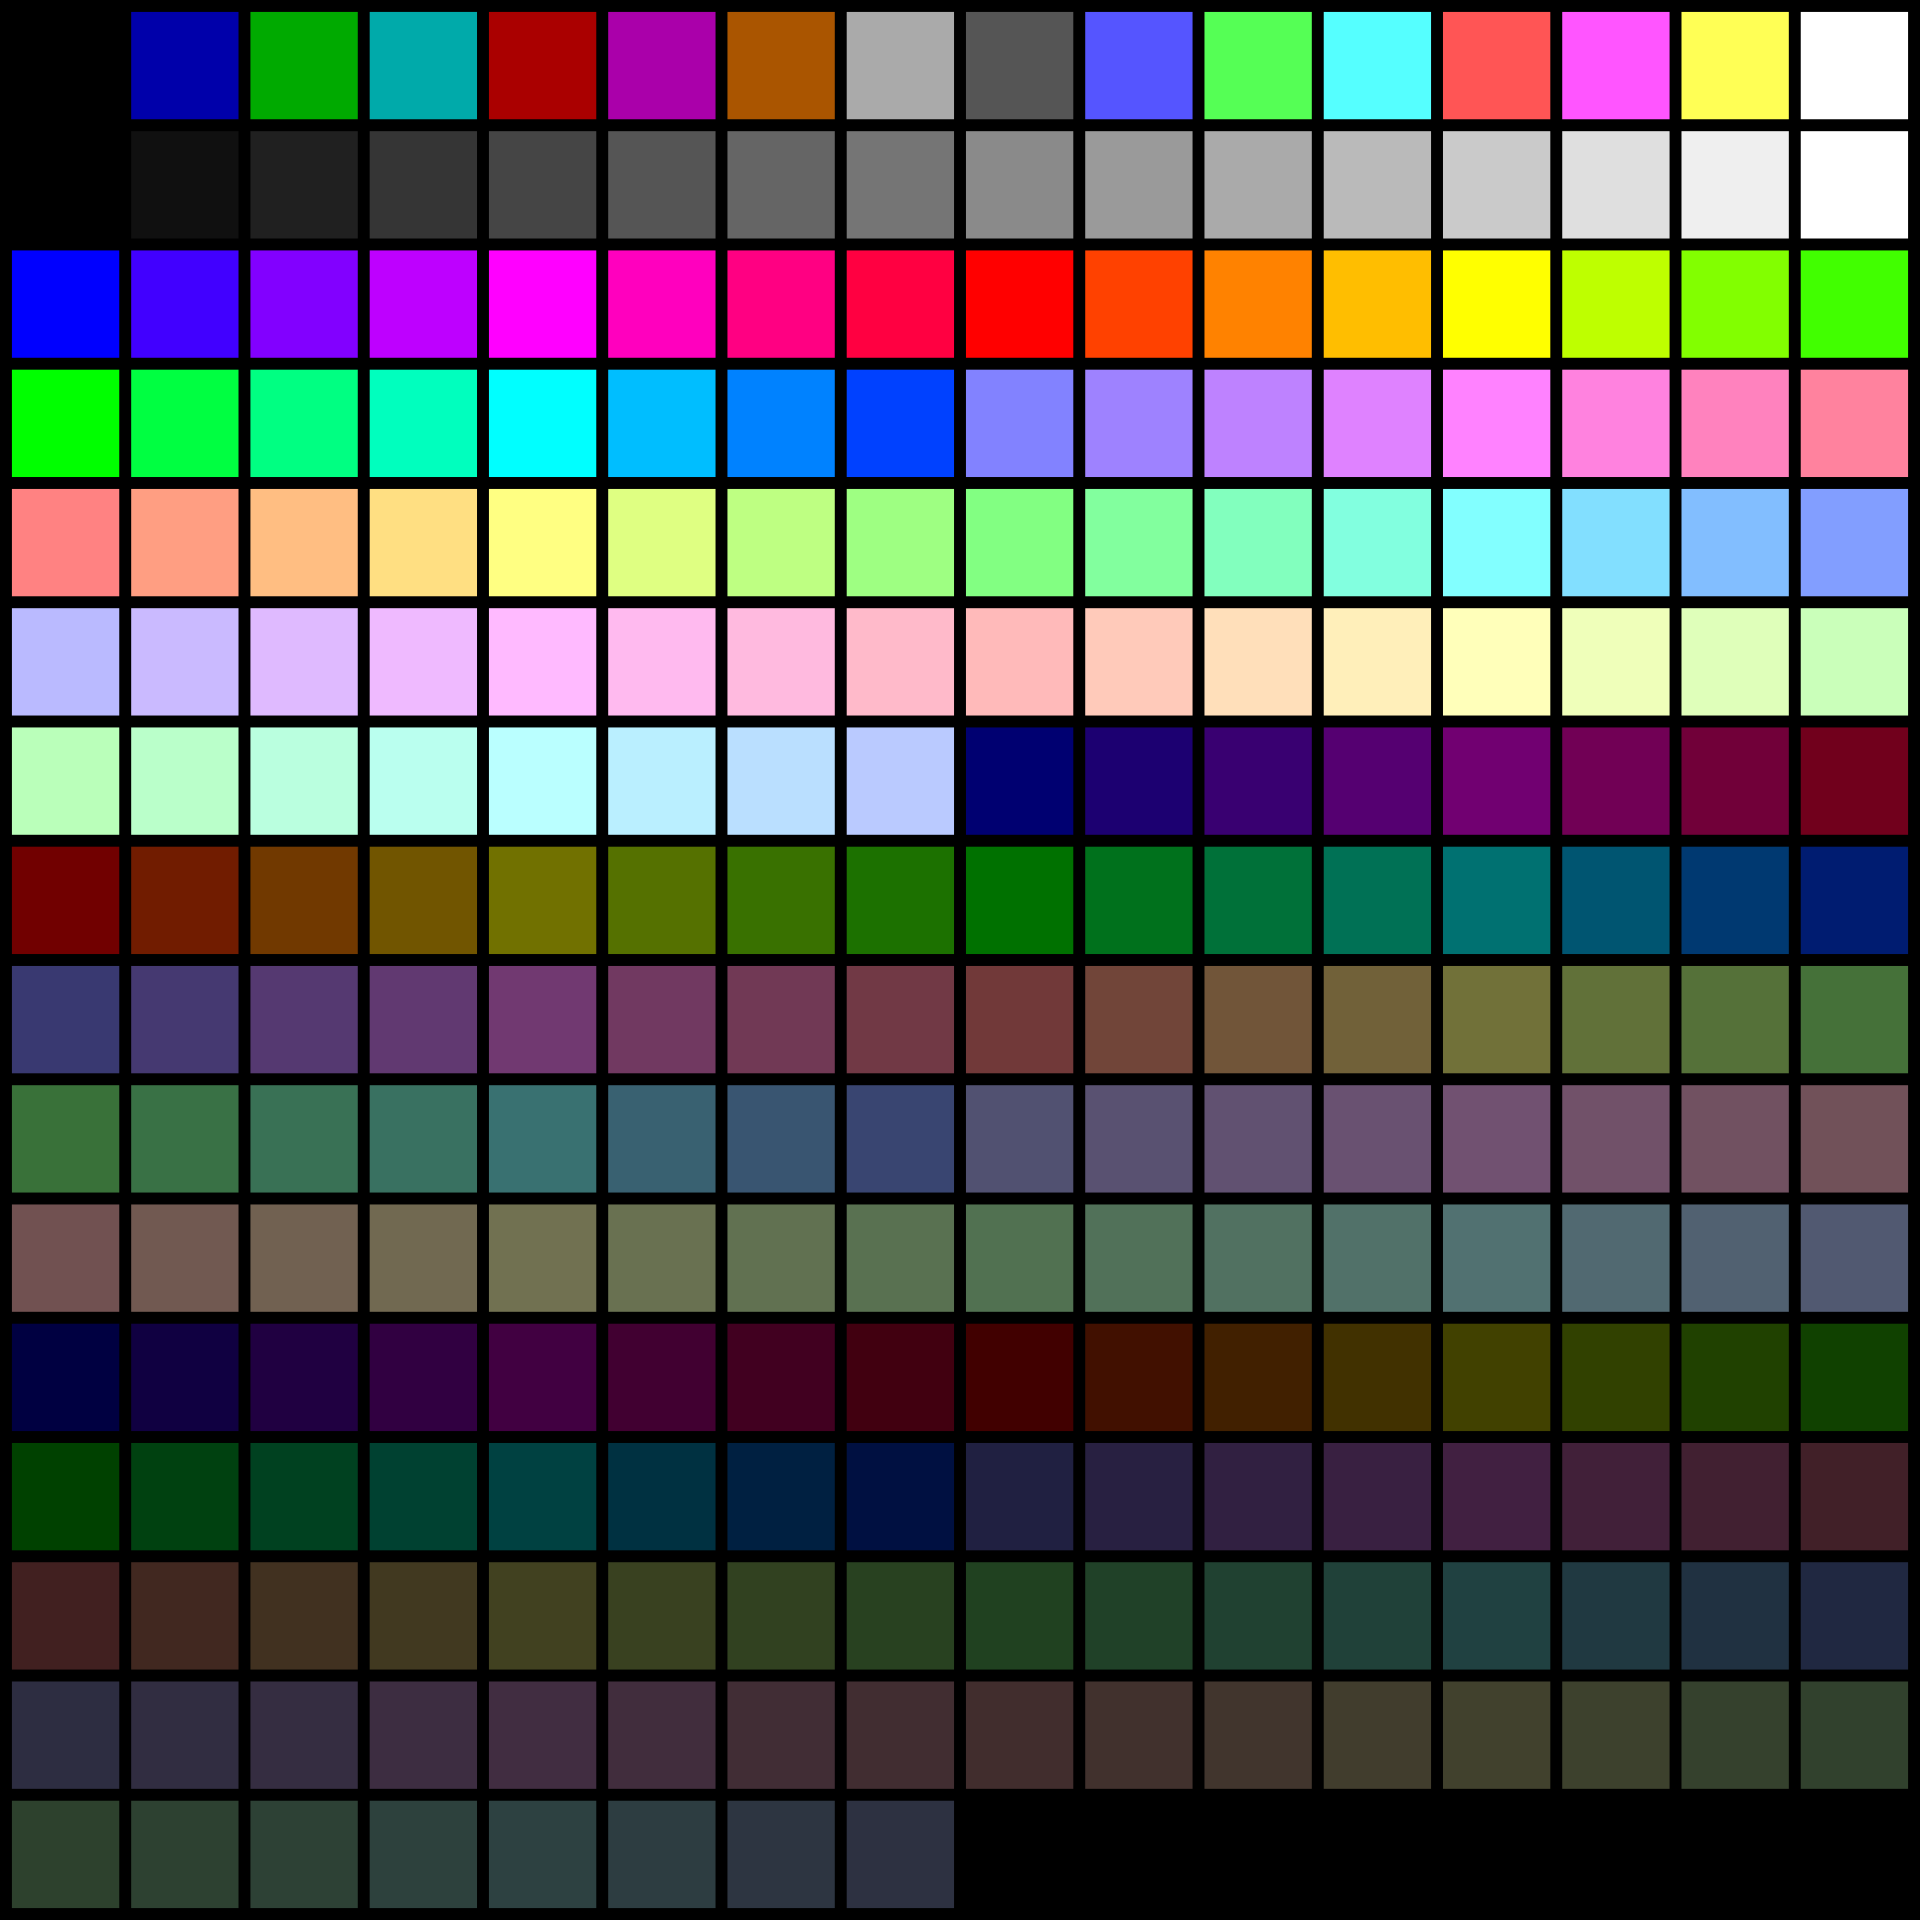 1920px-VGA_palette_with_black_borders.svg